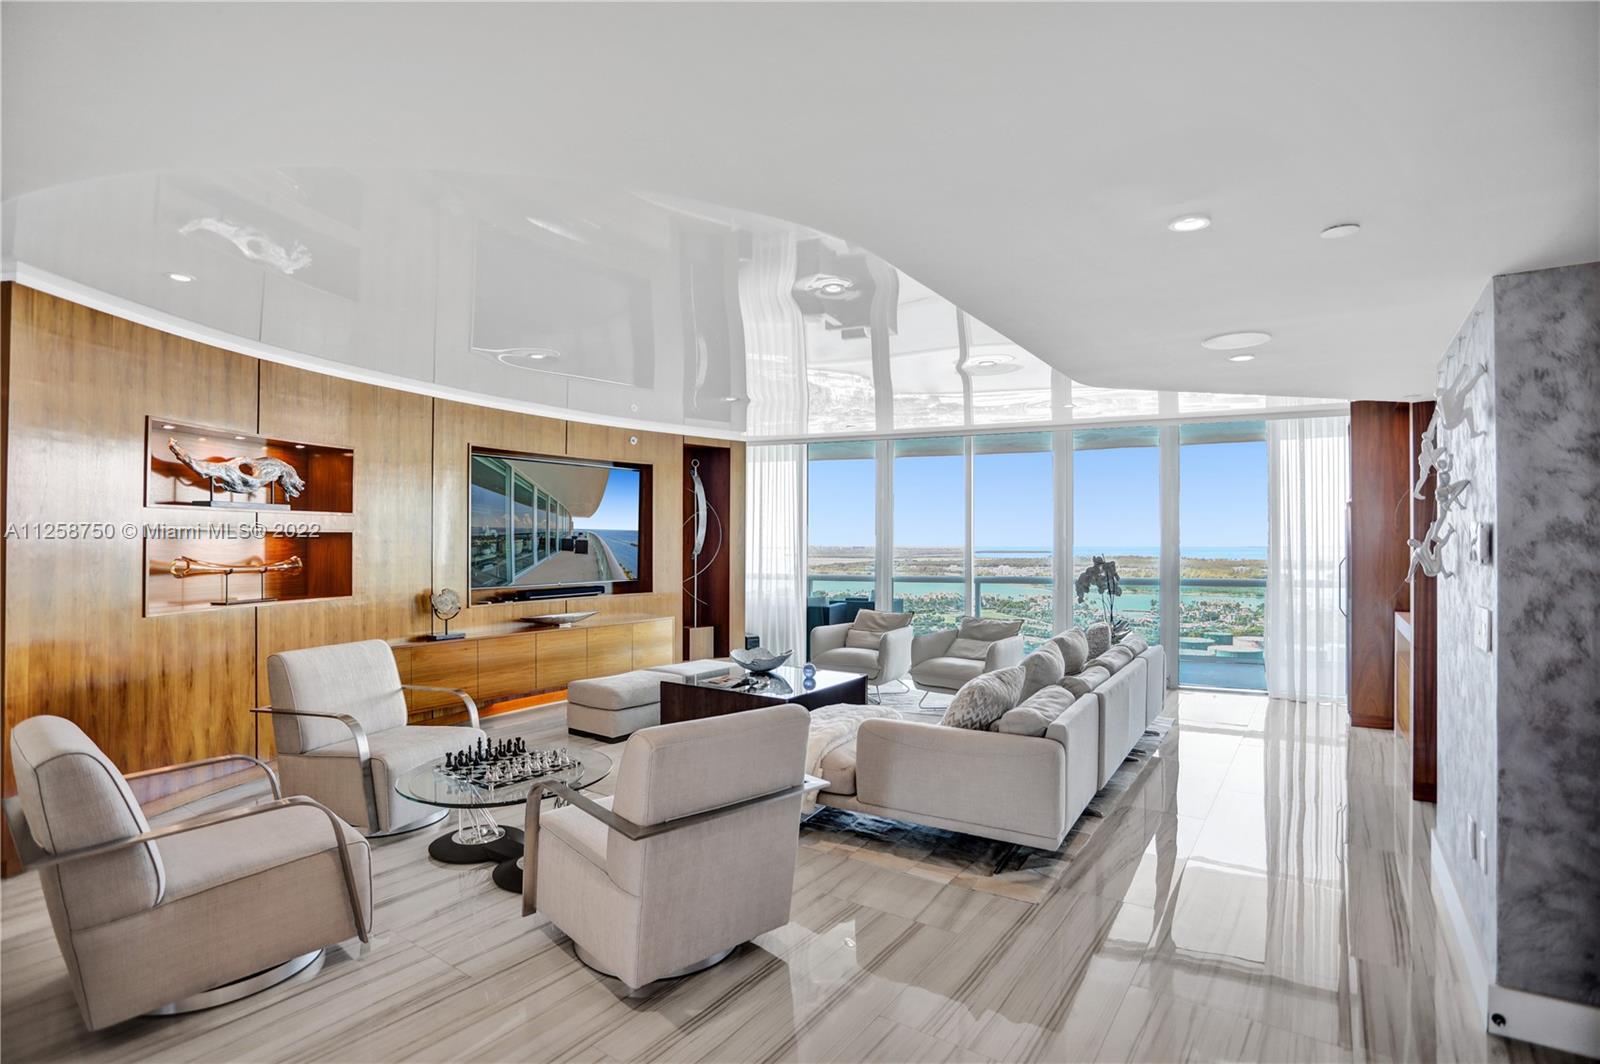 Property for Sale at 1000 S Pointe Dr 3402, Miami Beach, Miami-Dade County, Florida - Bedrooms: 3 
Bathrooms: 4  - $6,450,000